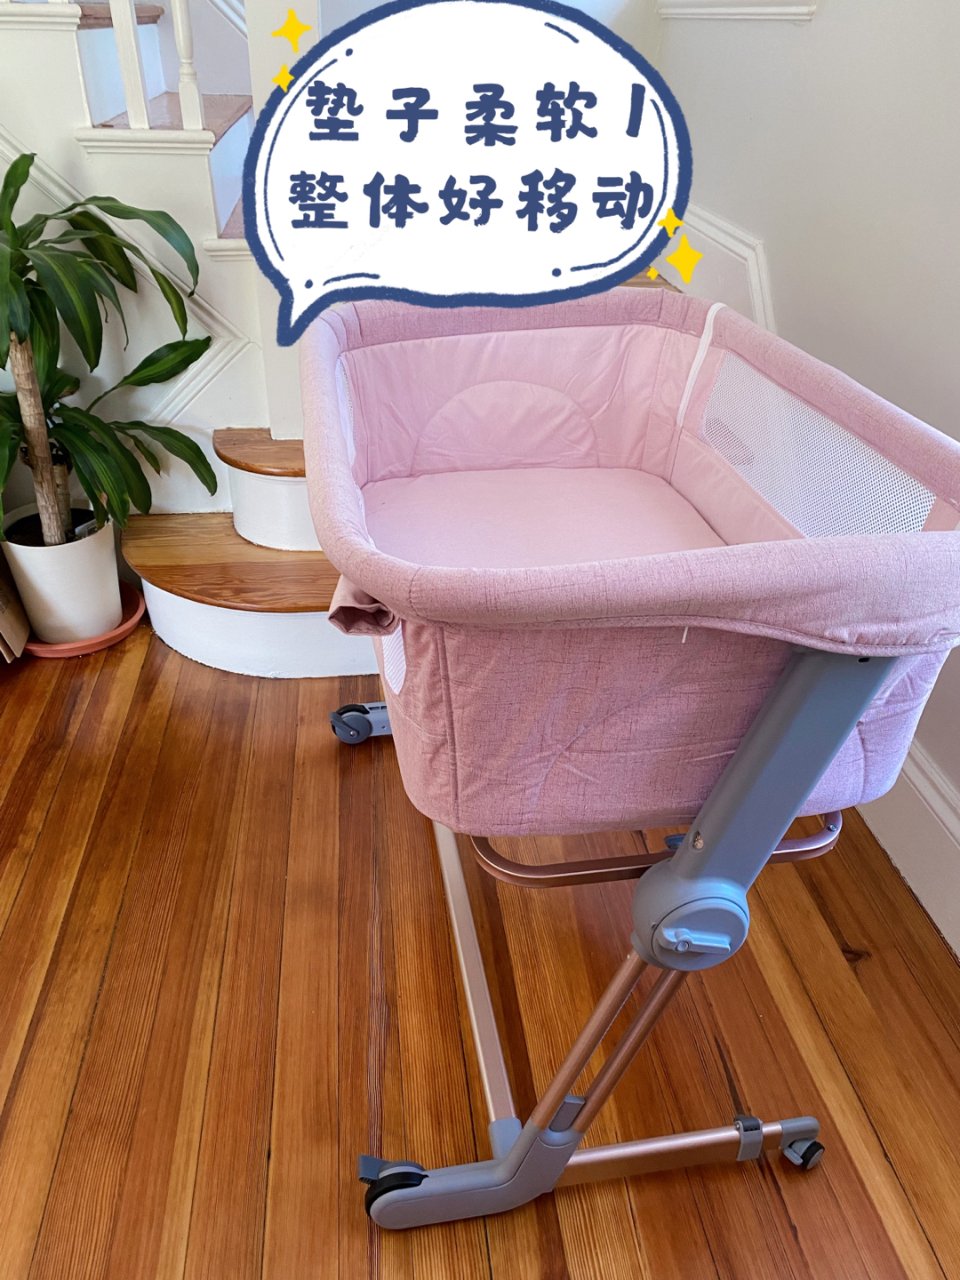 Unilove 婴儿床👼🏼 测评体验...